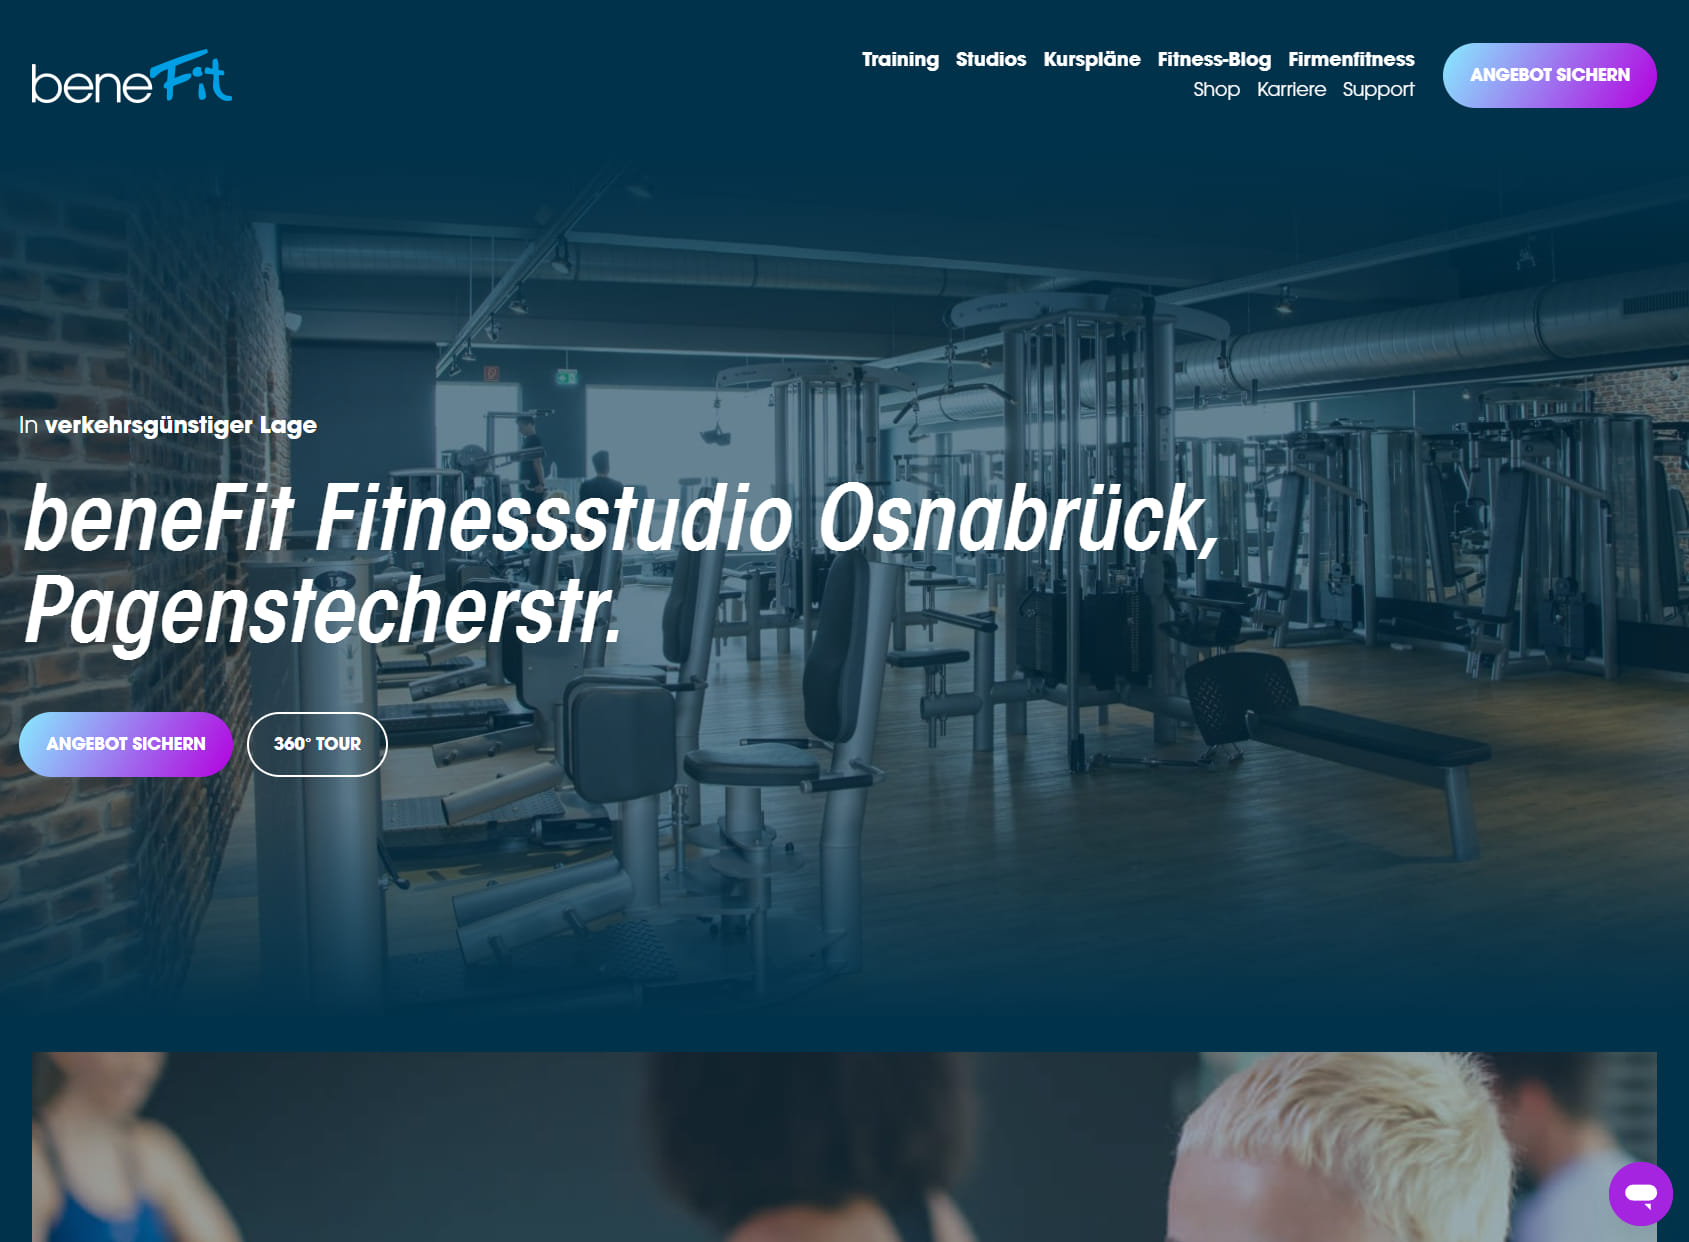 beneFit Fitnessstudio Osnabrück (Pagenstecherstraße)